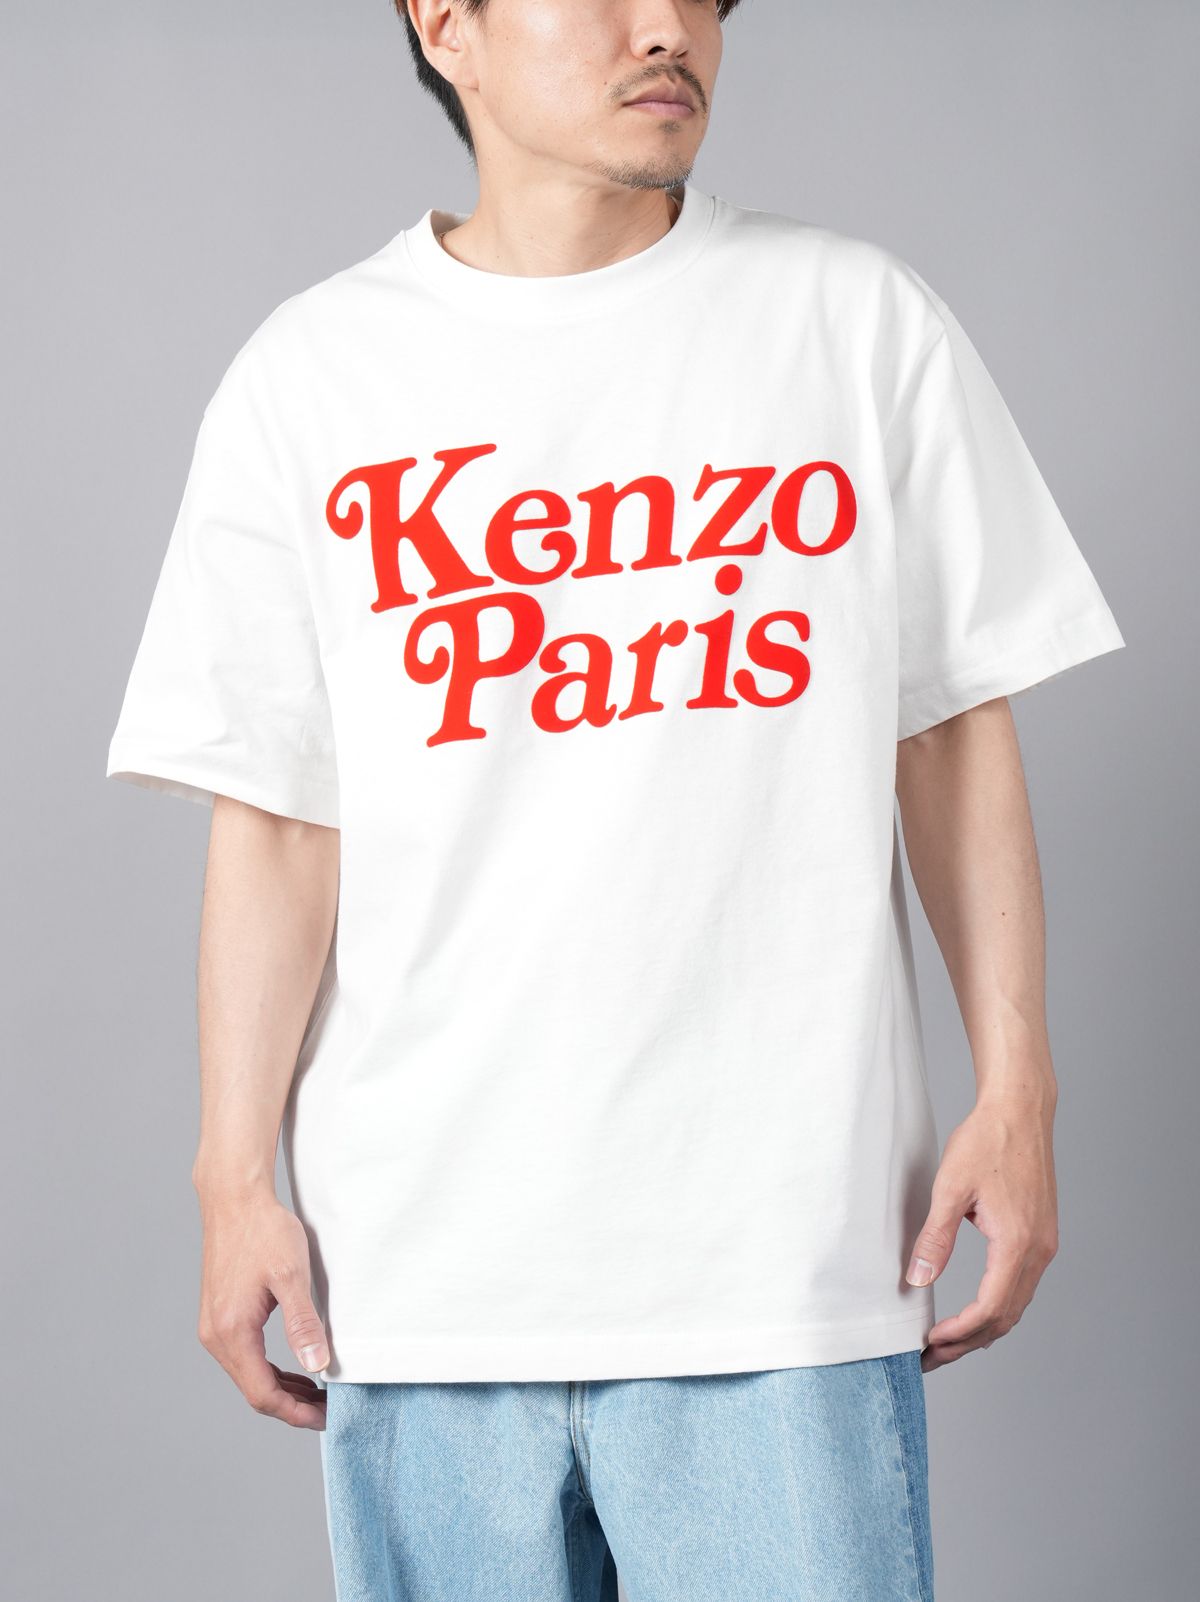 KENZO - 【残りわずか】【限定】 KENZO x VERDY / KENZO BY VERDY